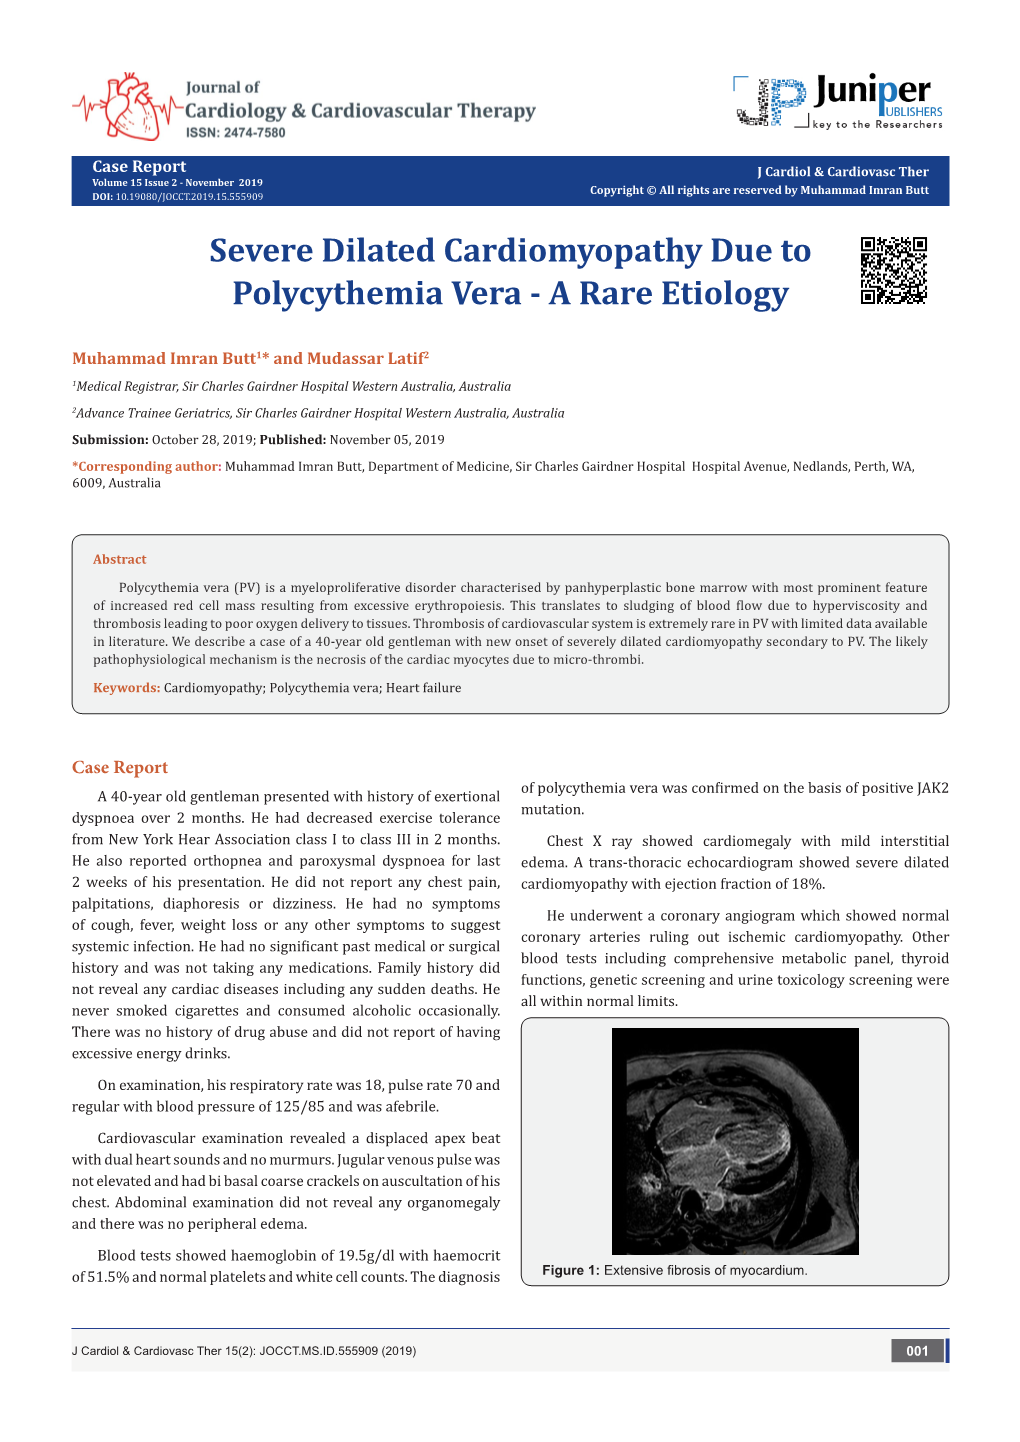 Severe Dilated Cardiomyopathy Due to Polycythemia Vera - a Rare Etiology